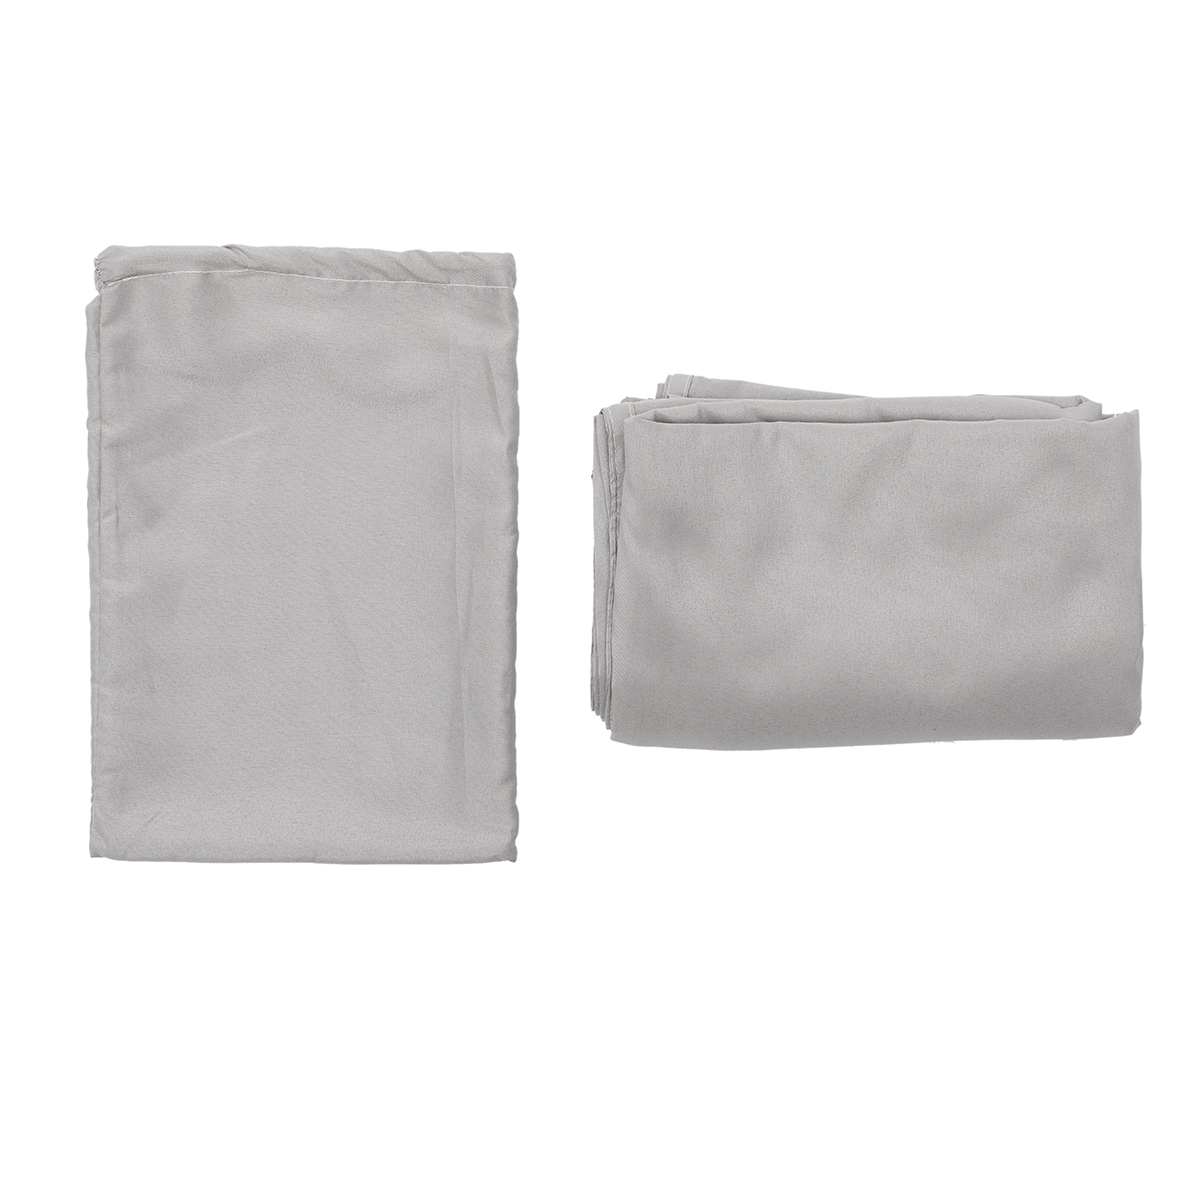 Portable-Sleeping-Bag-Cover-Ultralight-Sleep-Sheet-Outdoor-Camping-Hiking-Travel-Bag-1883995-16